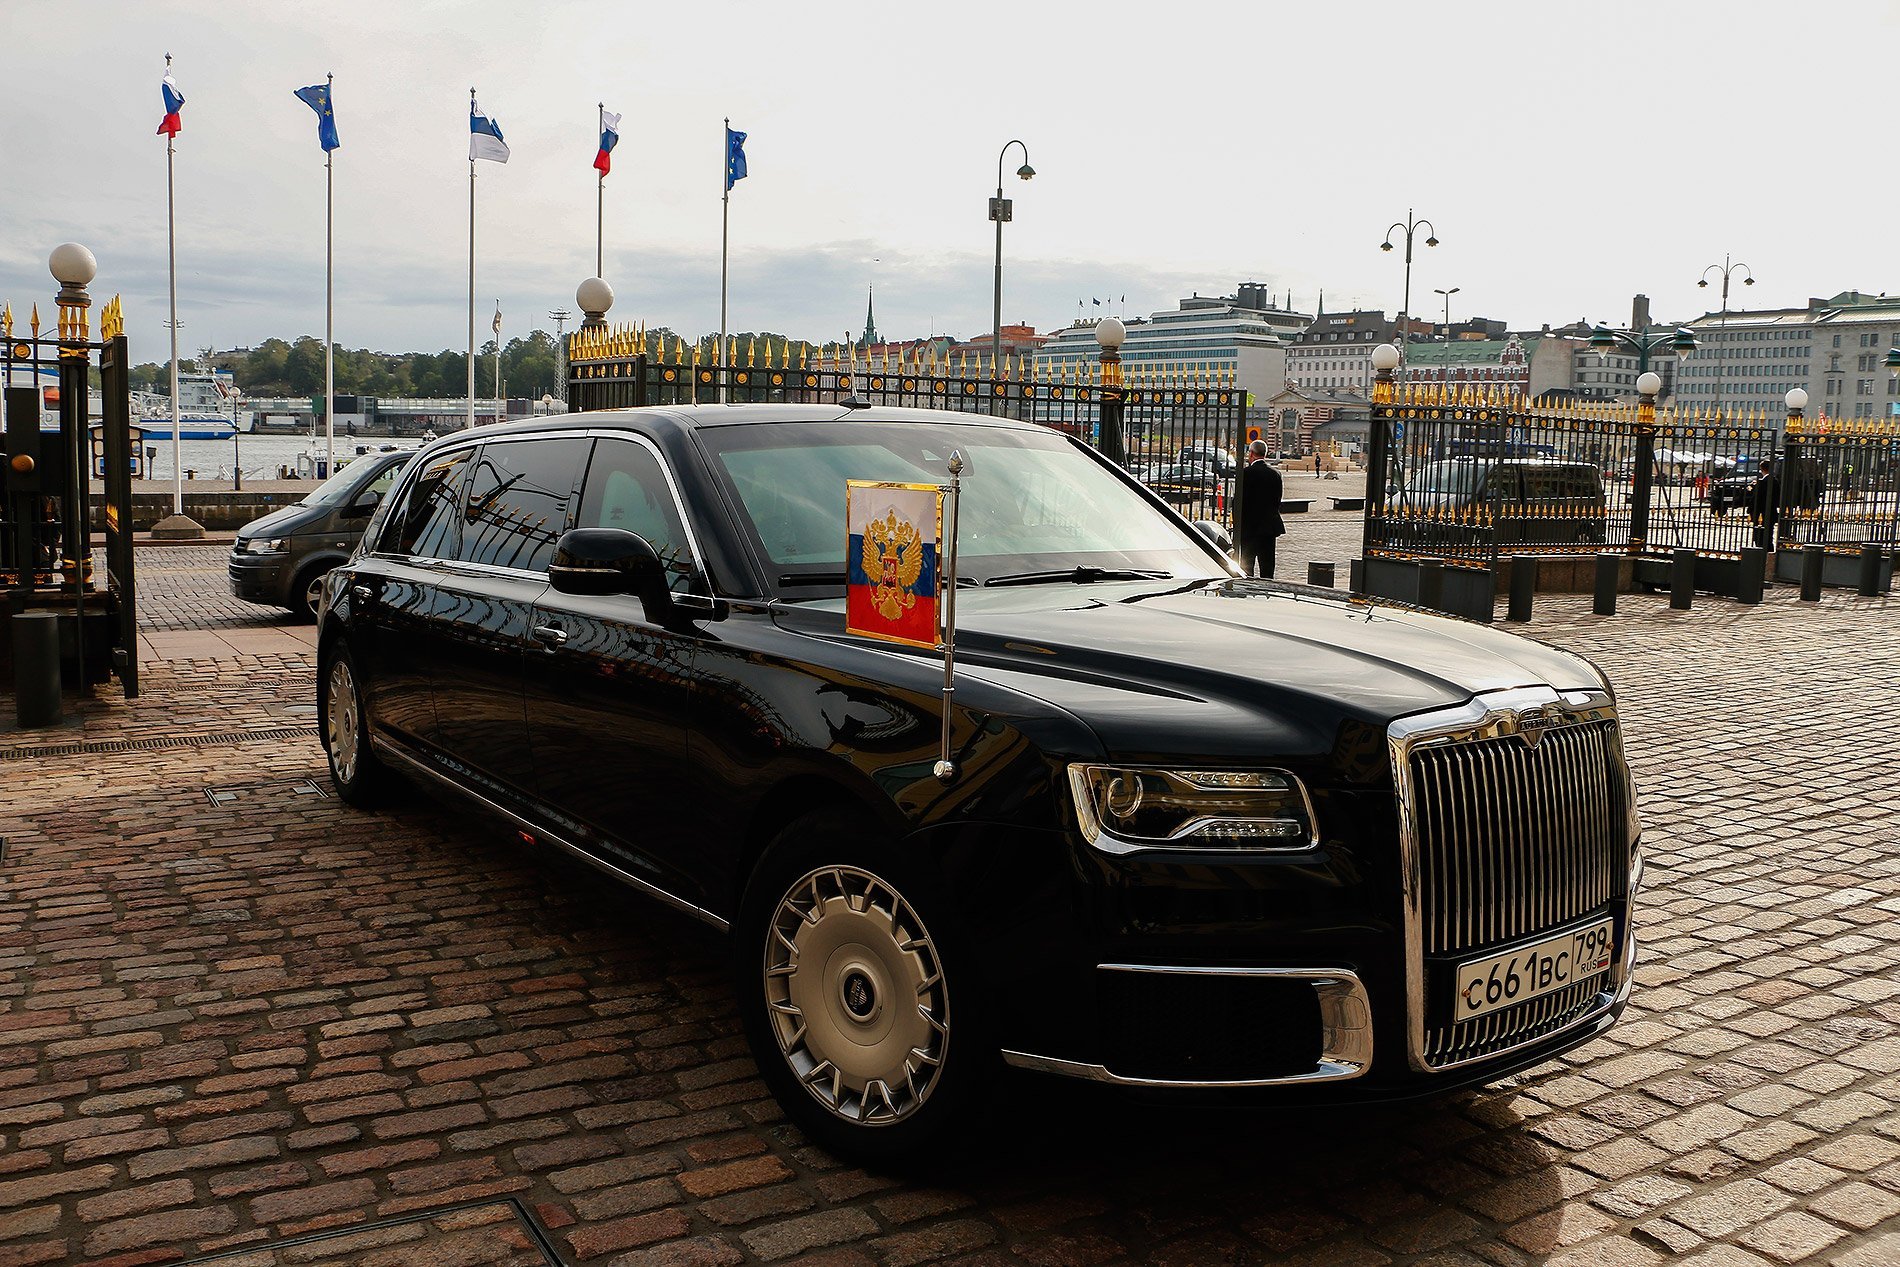 Президентский автомобиль. Аурус кортеж ФСО. Аурус Сенат ФСО. Машина Путина Аурус.